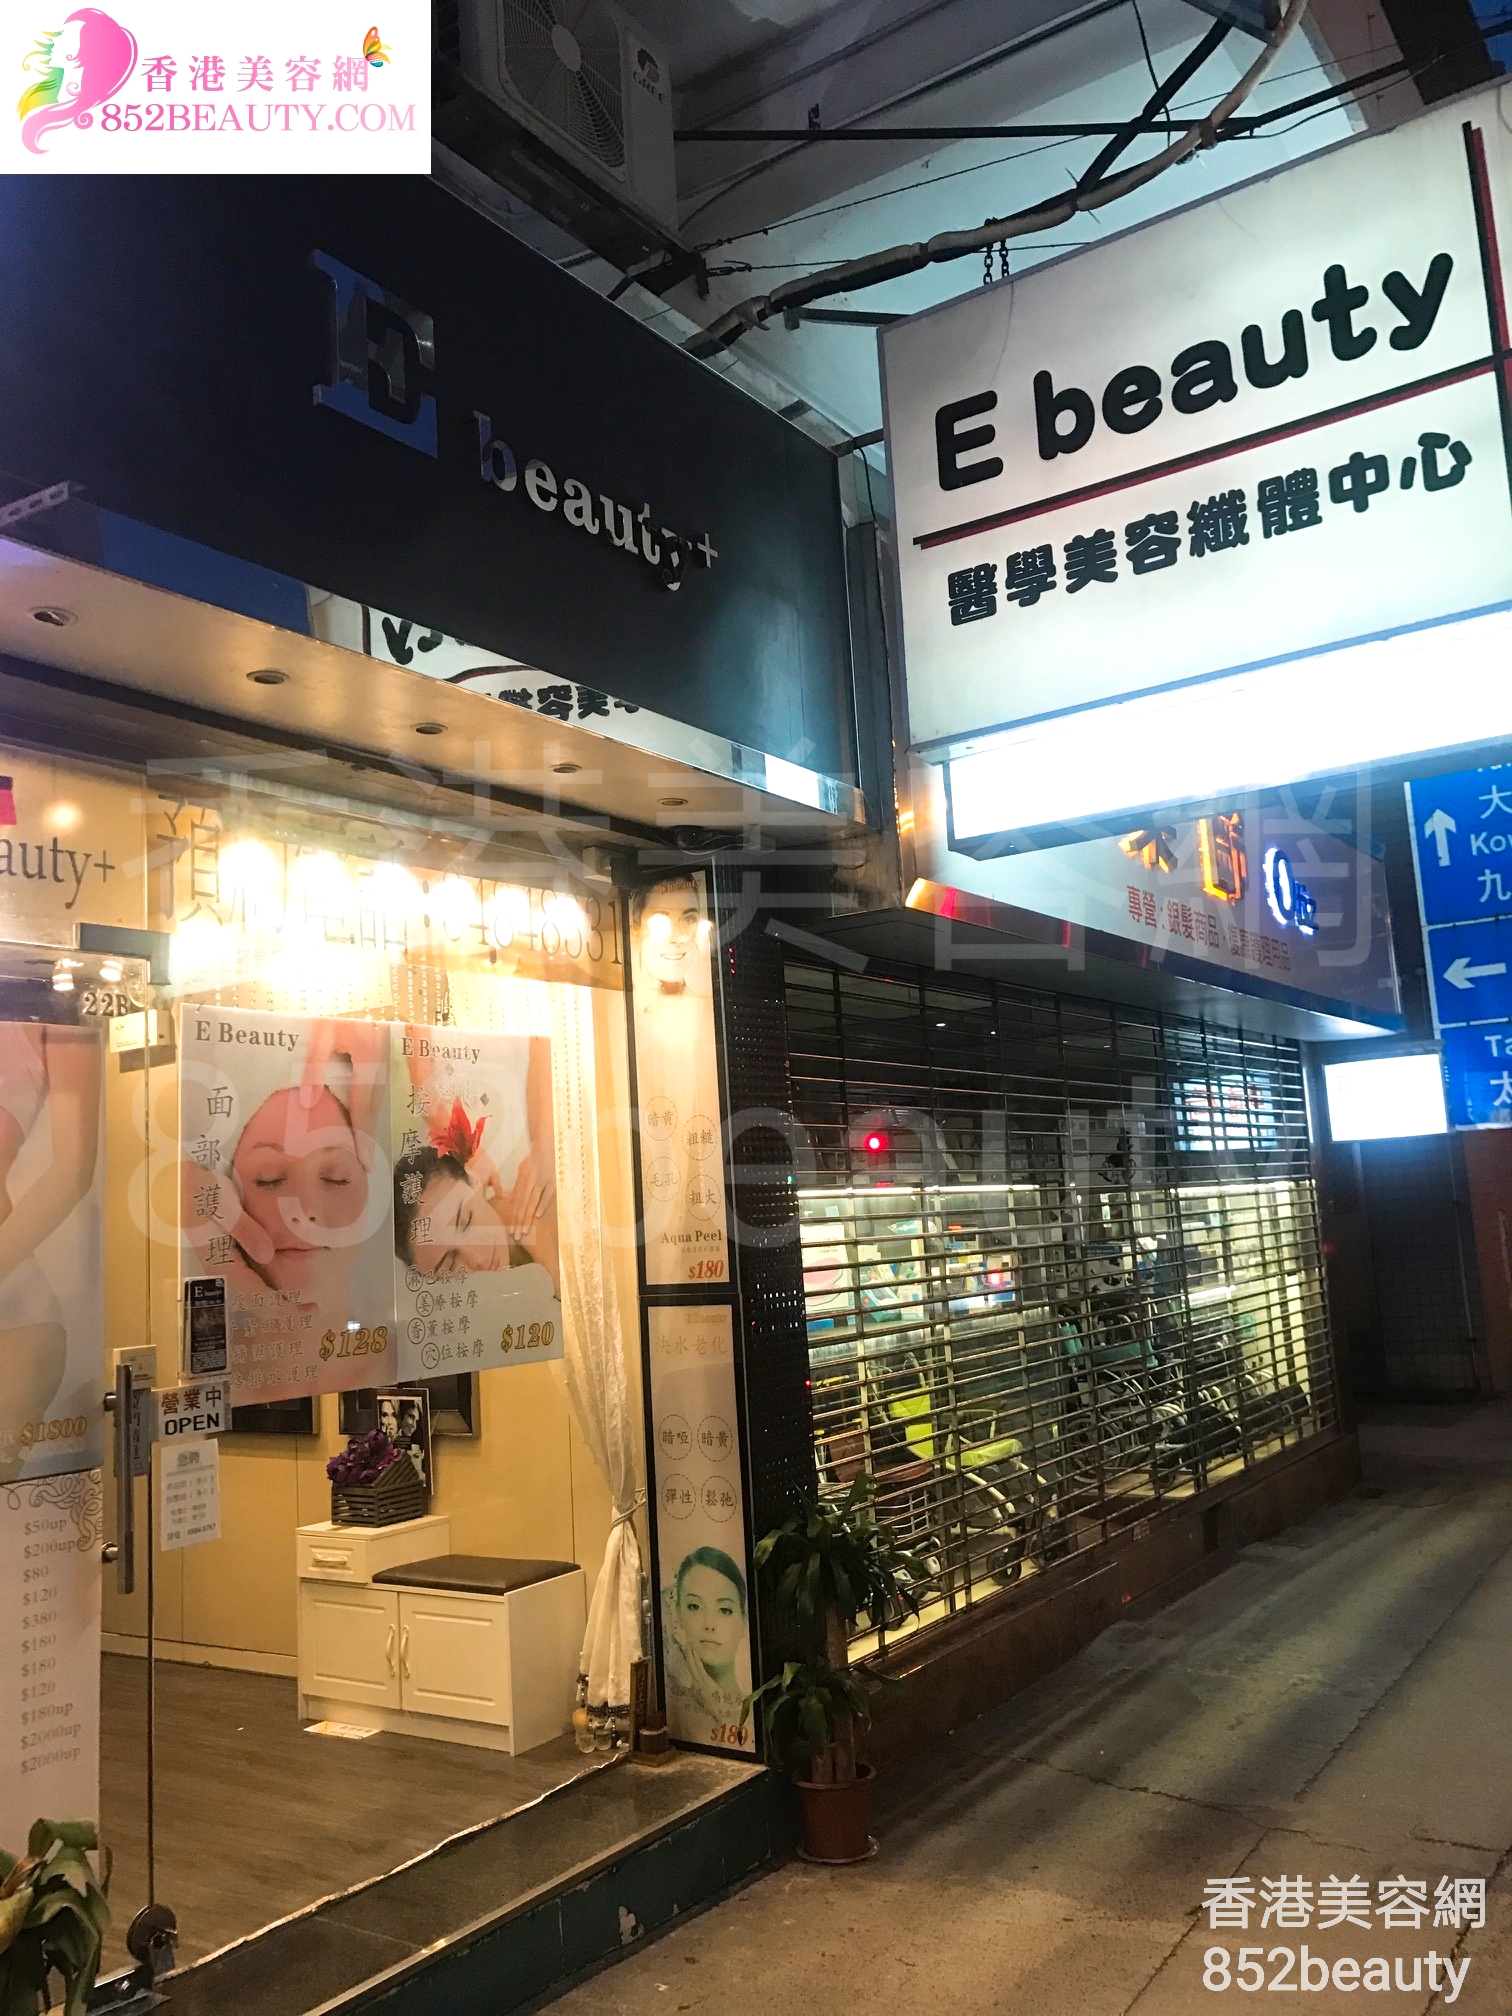 Massage/SPA: E beauty